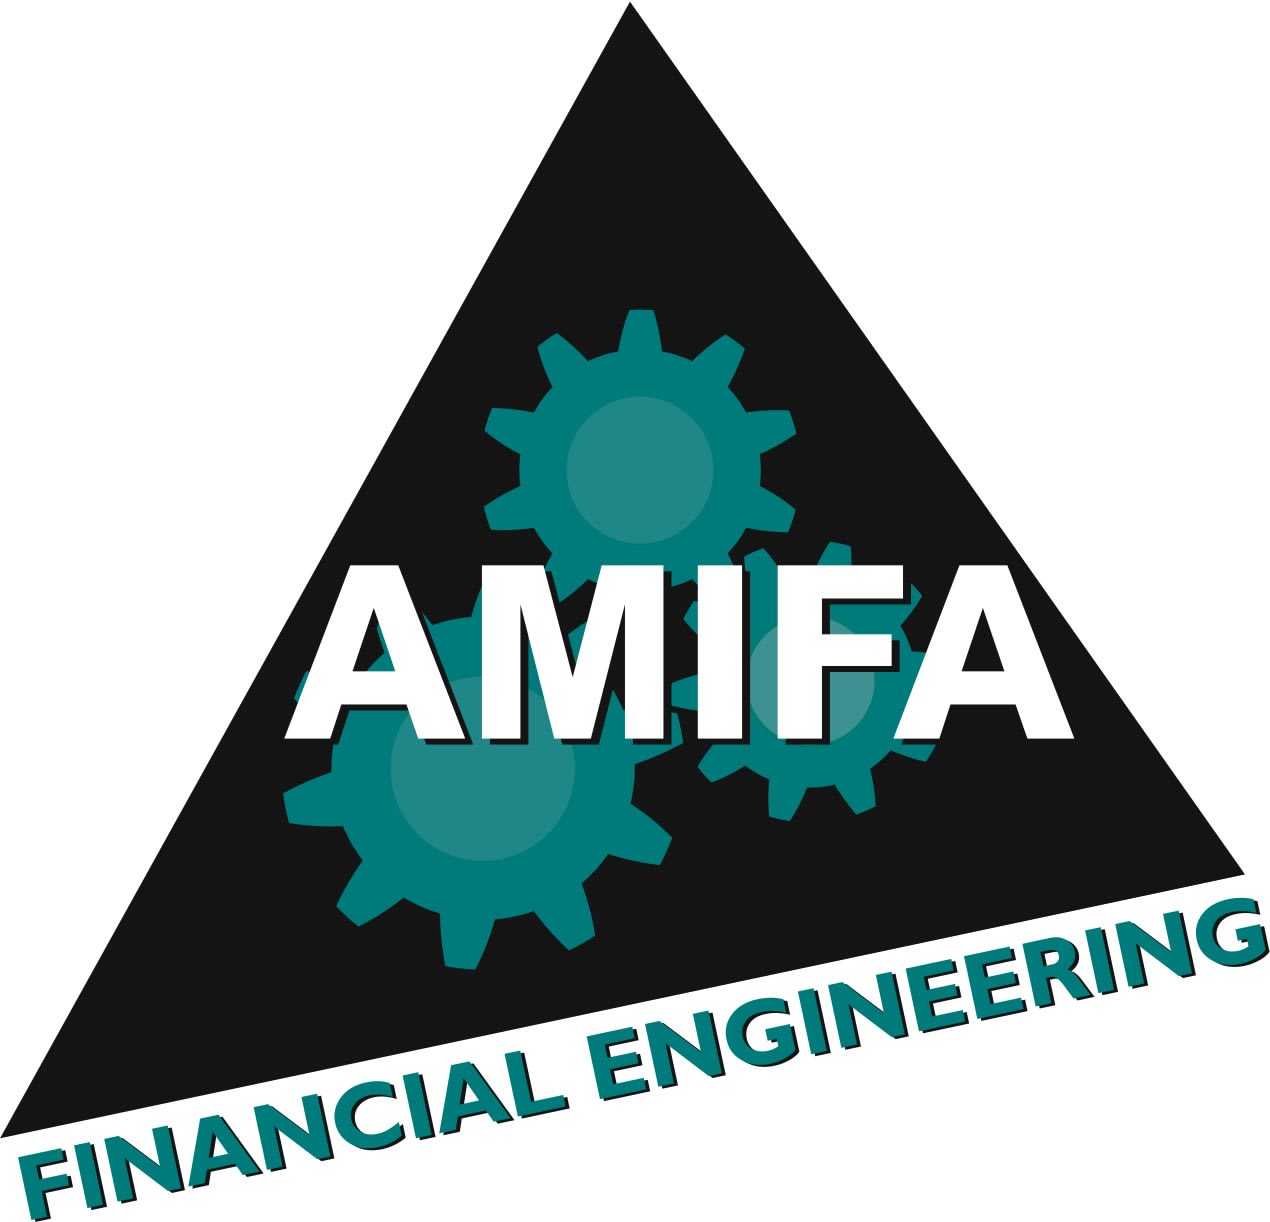 AMIFA Limited